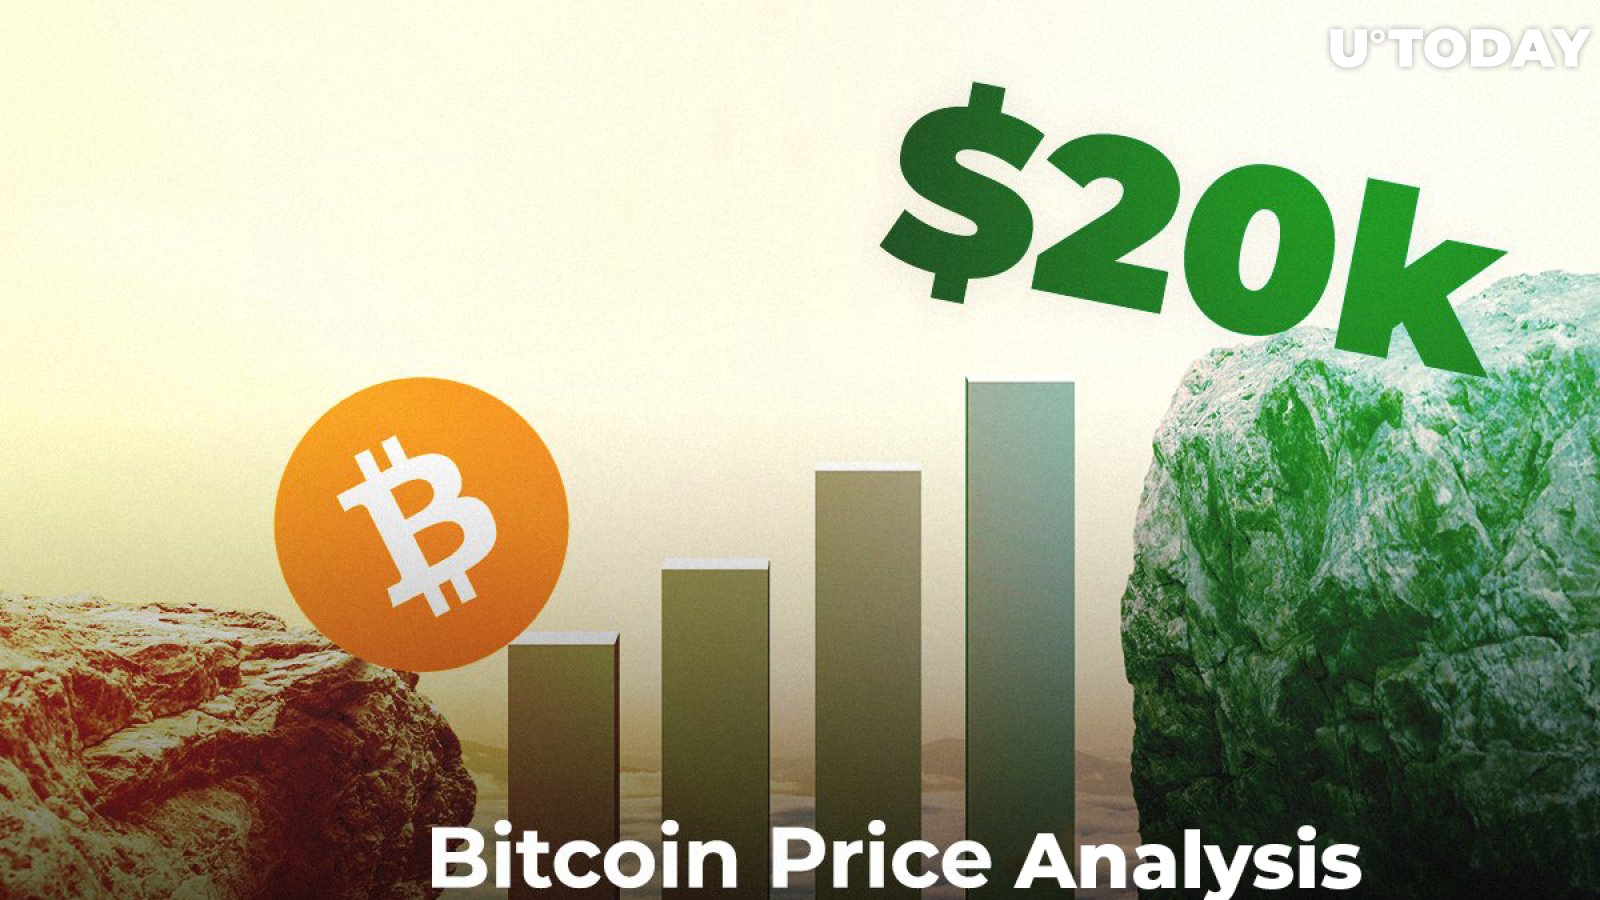 Bitcoin Price Analysis for 2019: Will BTC Price Get Back to $20,000?